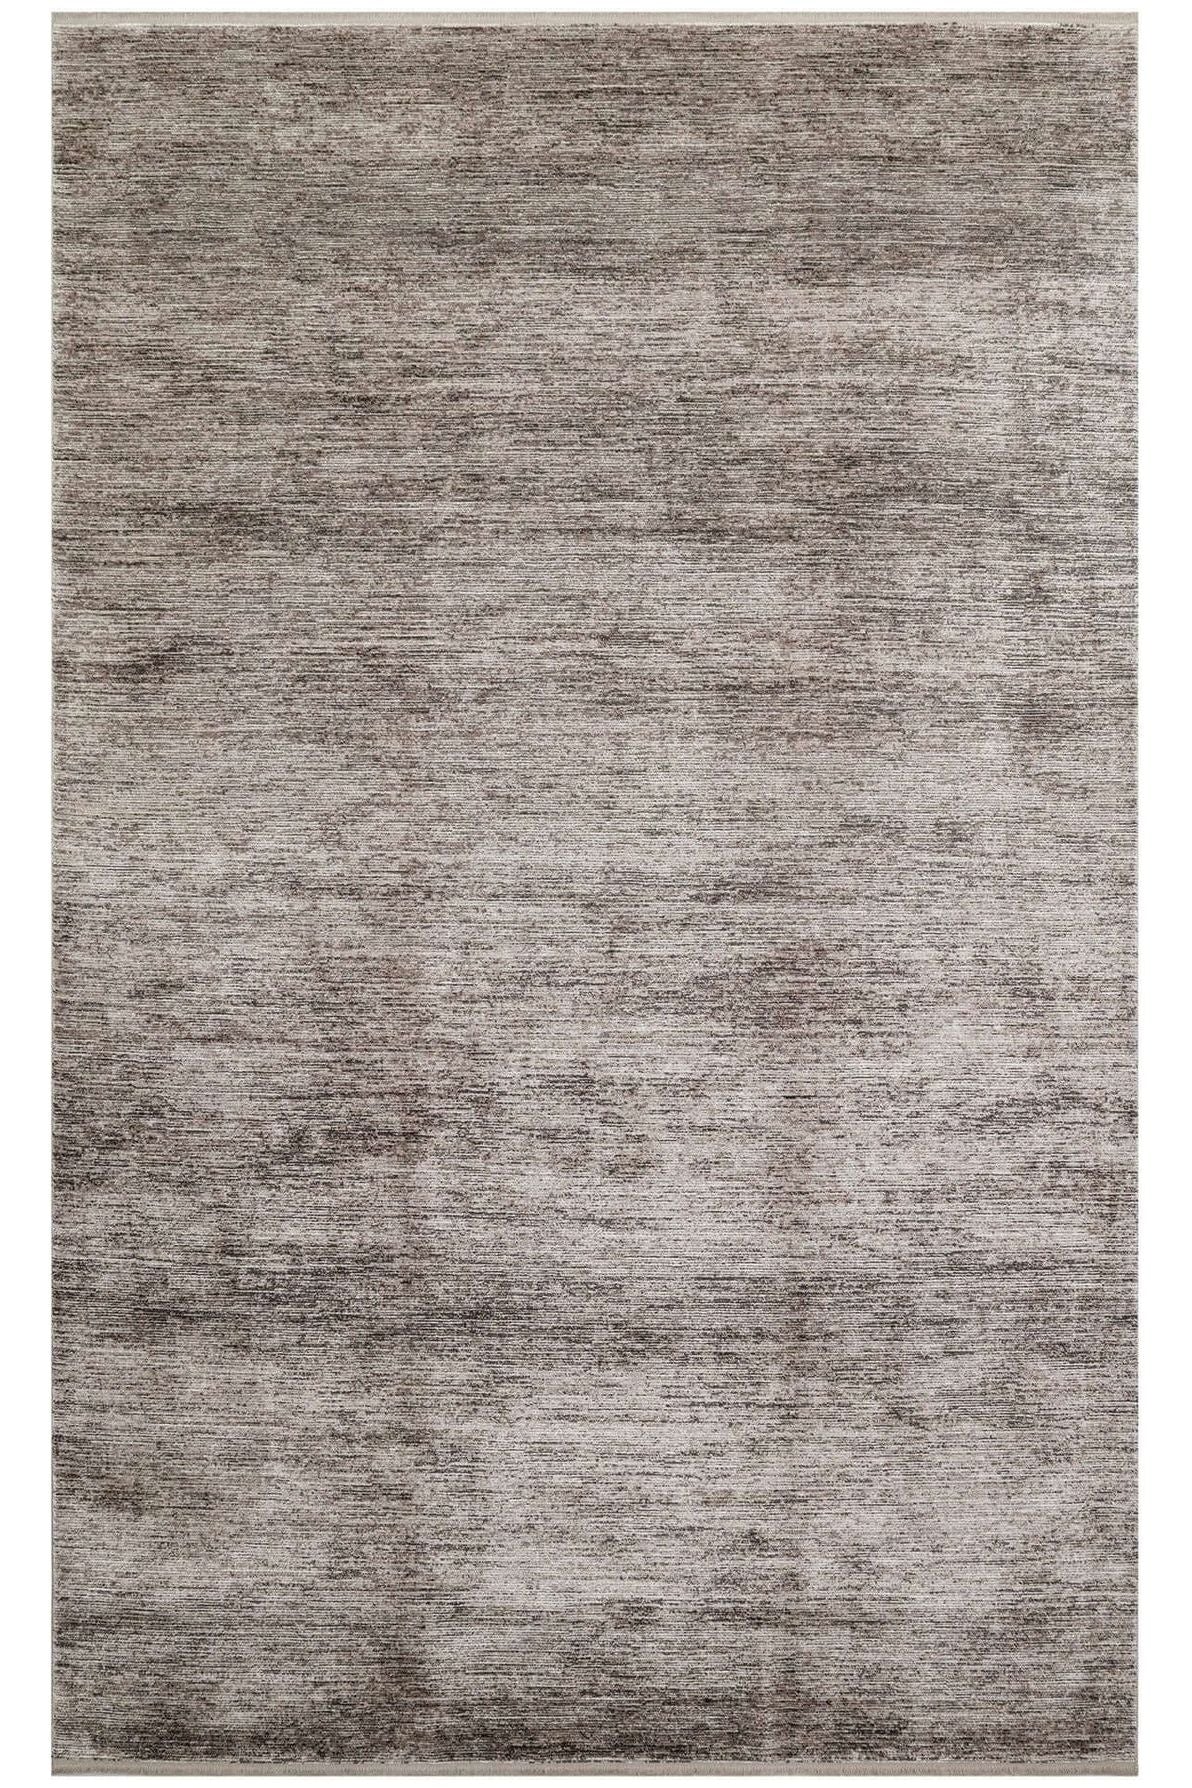 #Turkish_Carpets_Rugs# #Modern_Carpets# #Abrash_Carpets#Lug Plain D.Grey